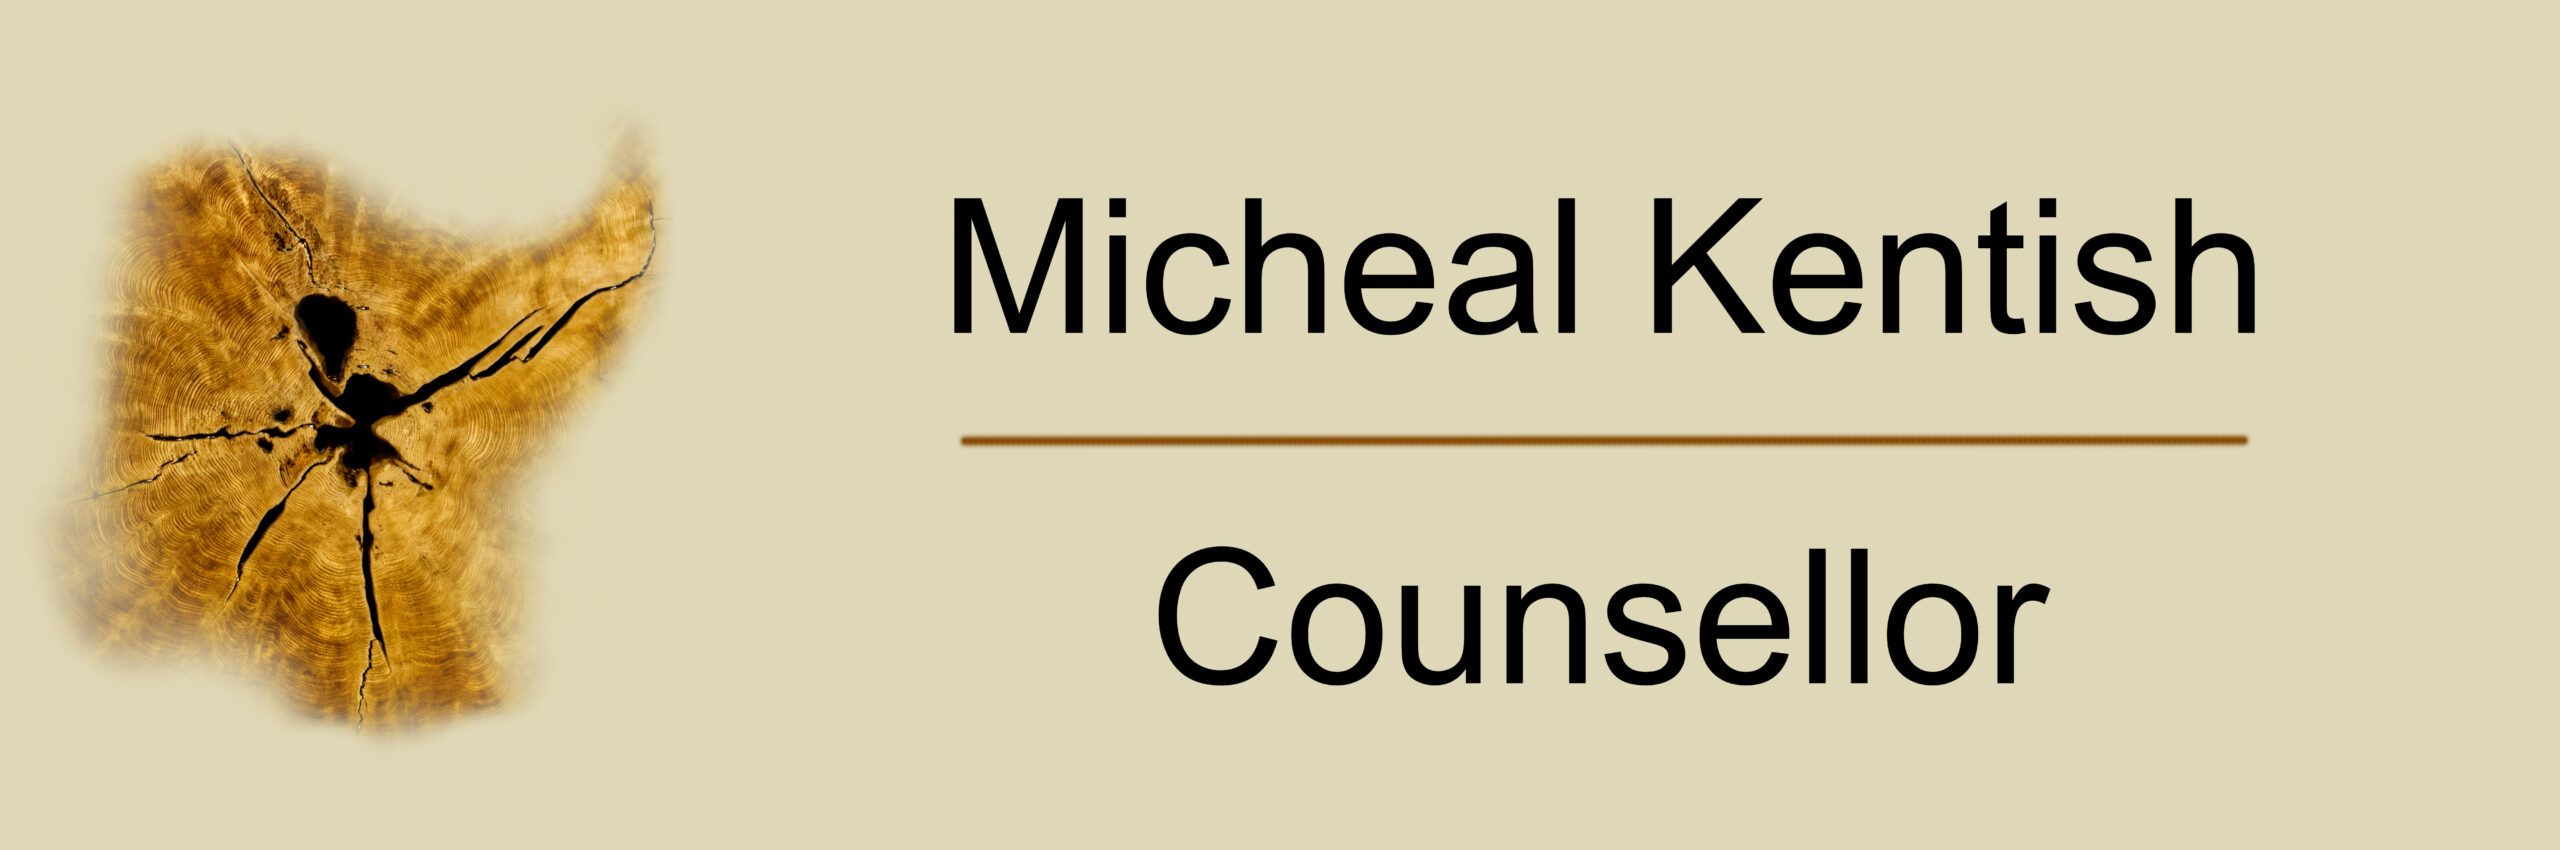 Micheal Kentish